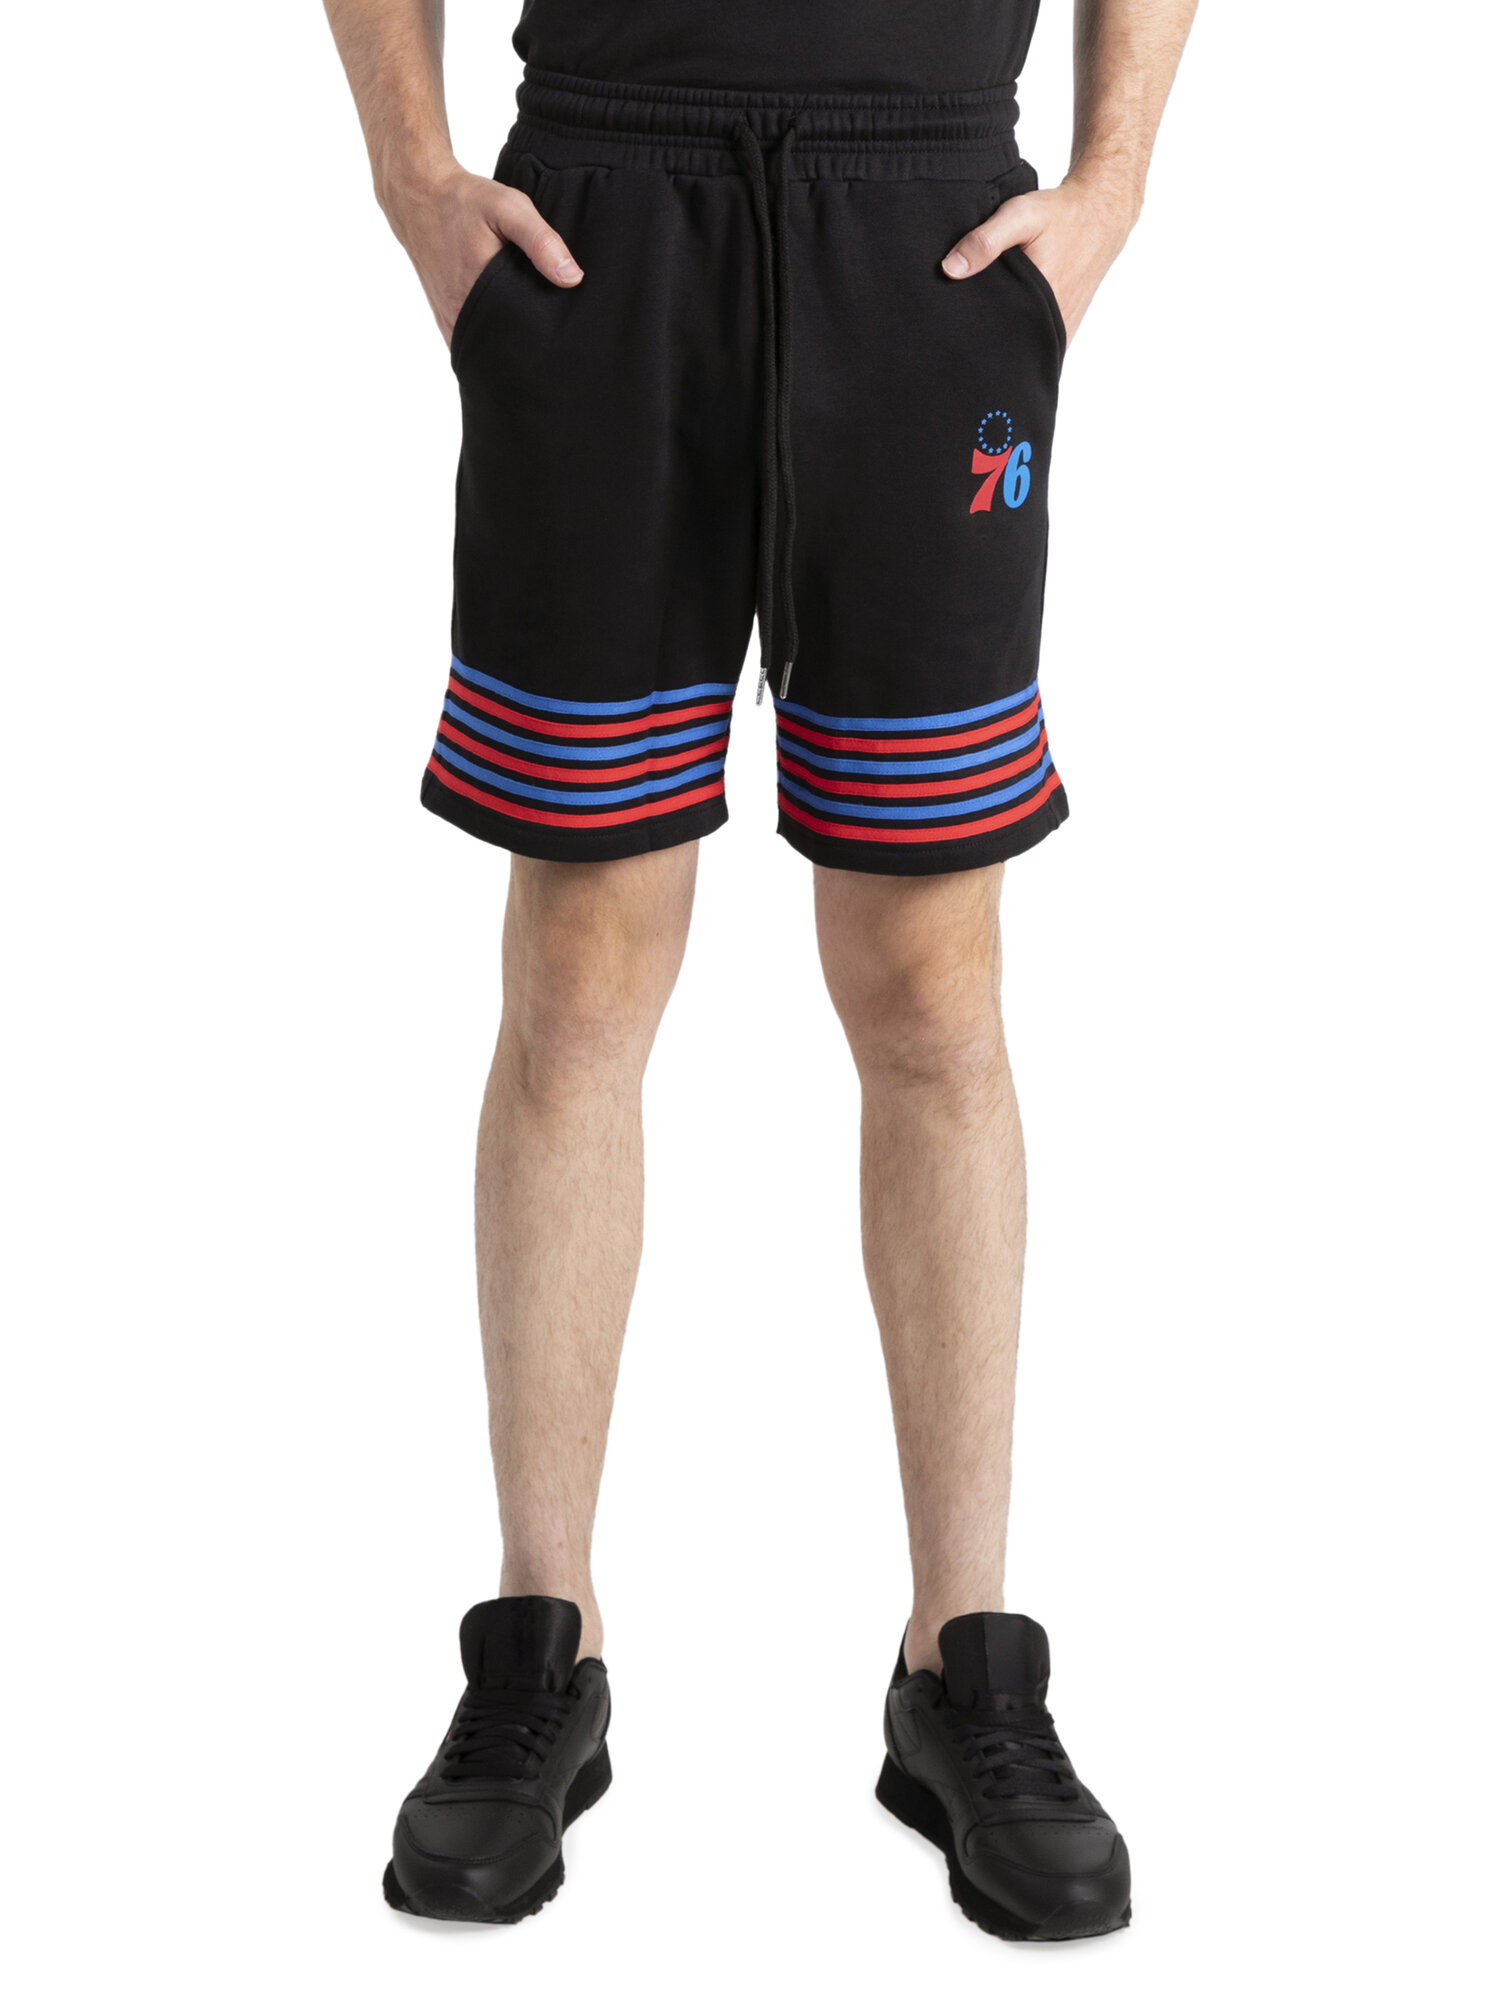 LA Clippers Shorts — Grungy Gentleman